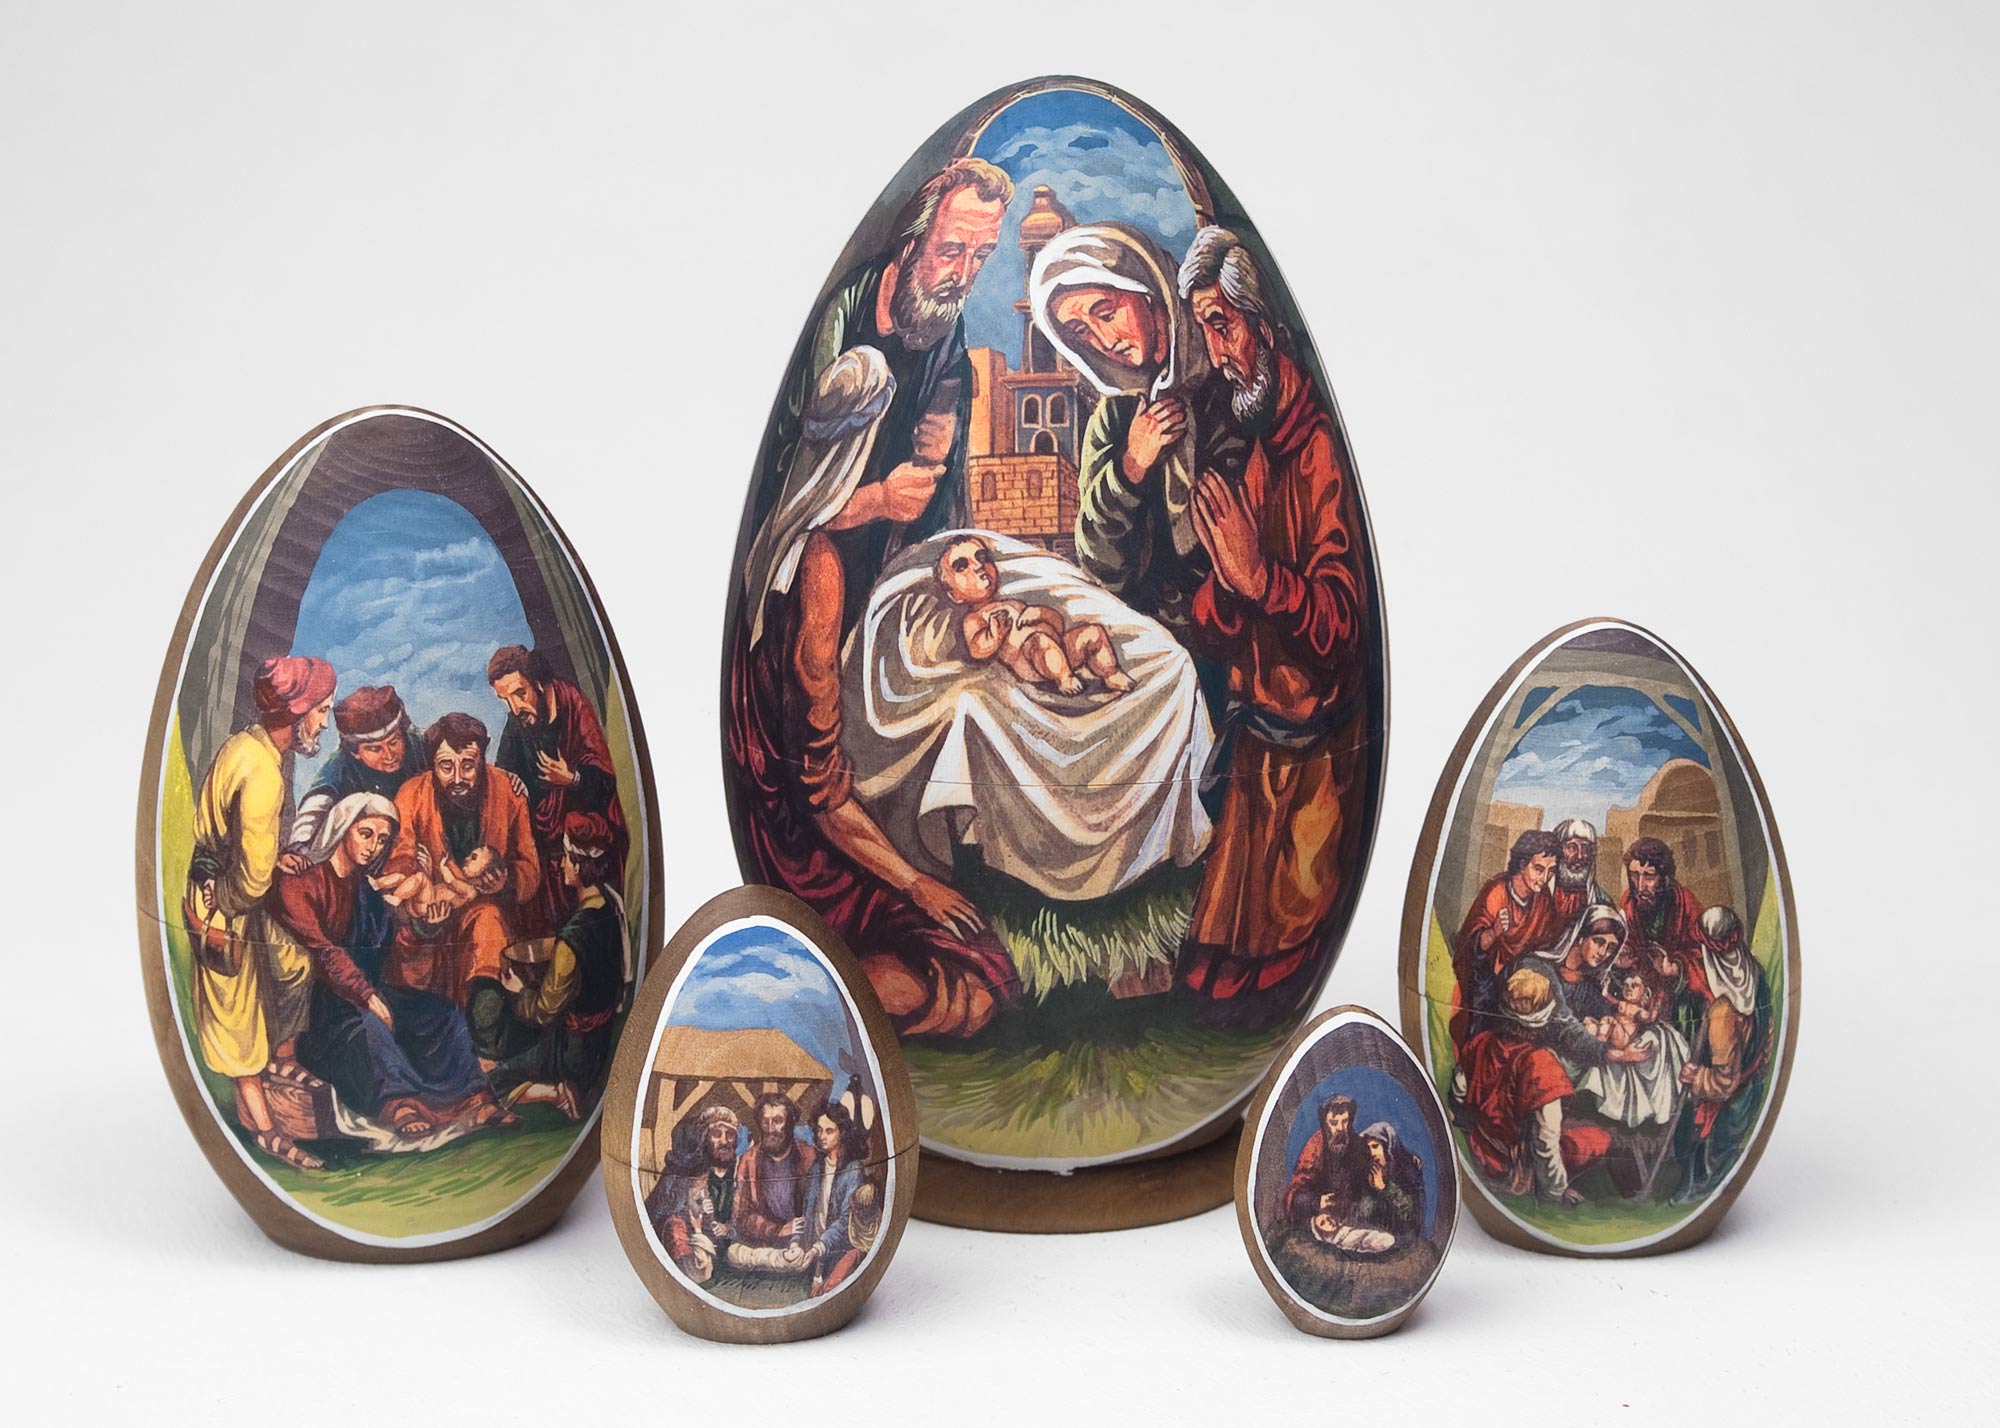 Buy Nativity Nesting Egg 5pc./5" at GoldenCockerel.com